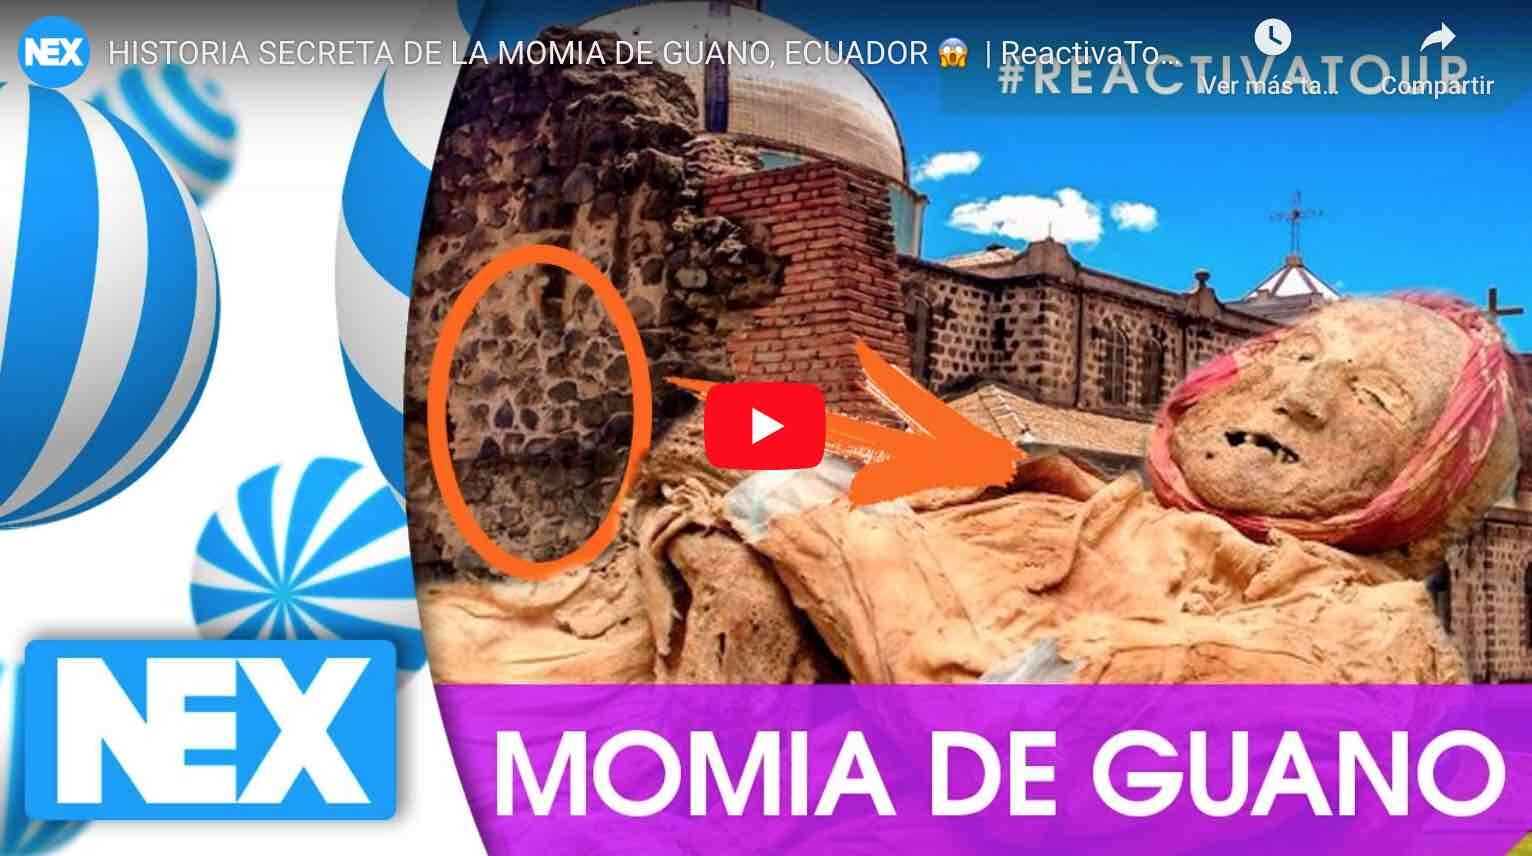 VIDEO: HISTORIA SECRETA DE LA MOMIA DE GUANO